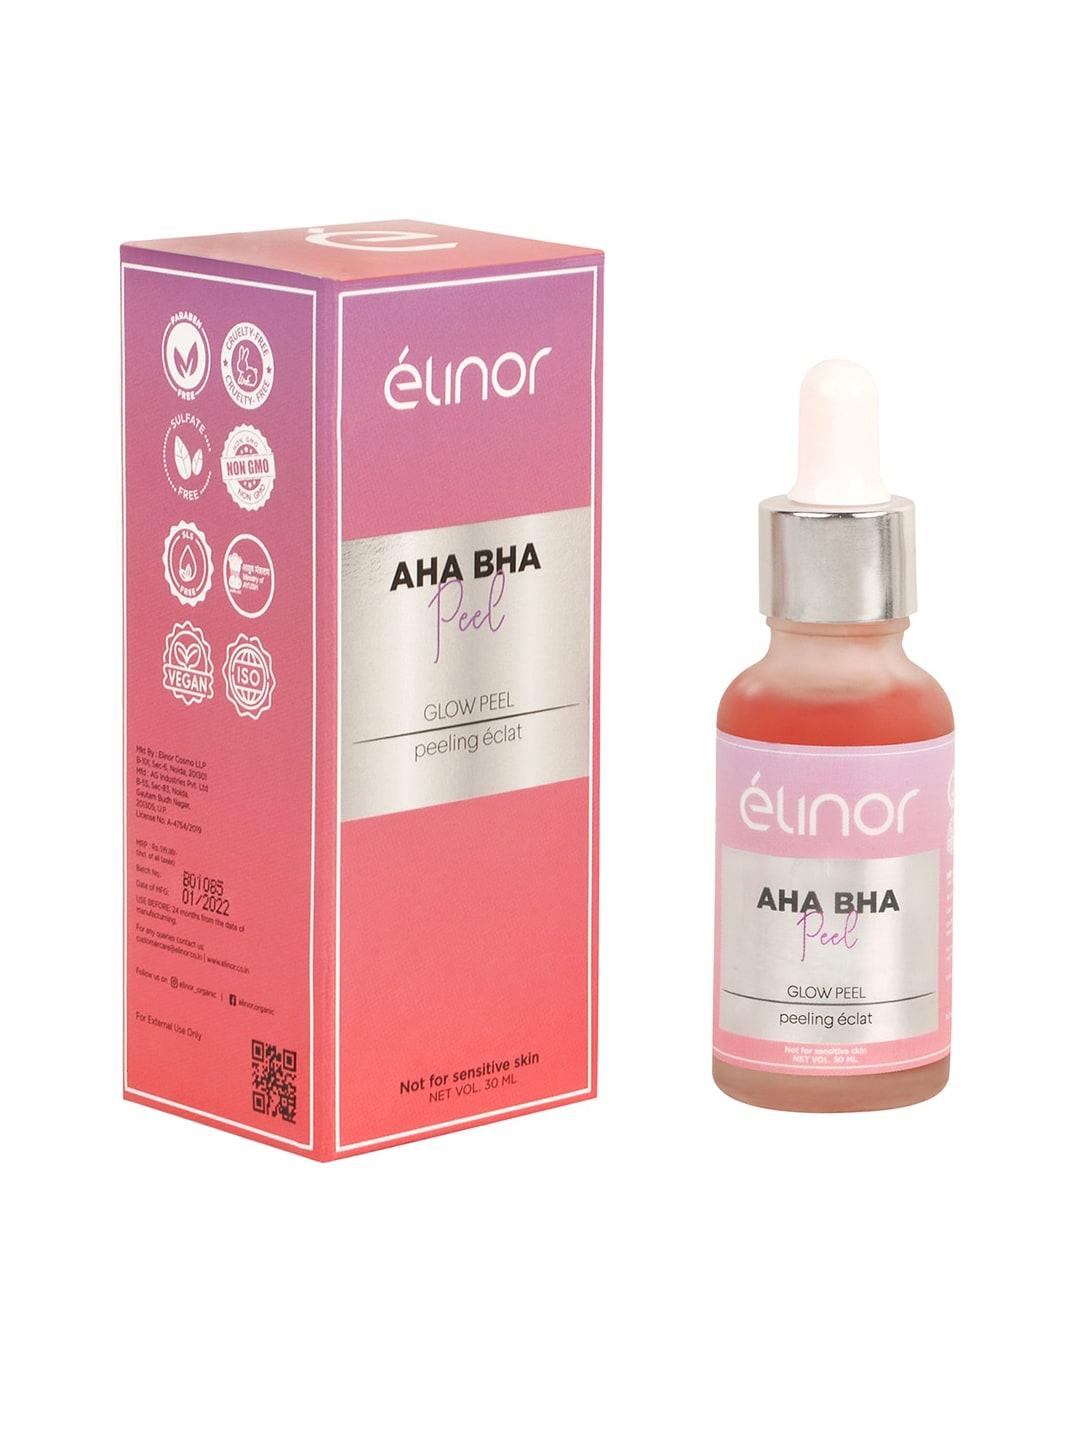 Elinor AHA BHA Glow Peel Face Serum - 30 ml